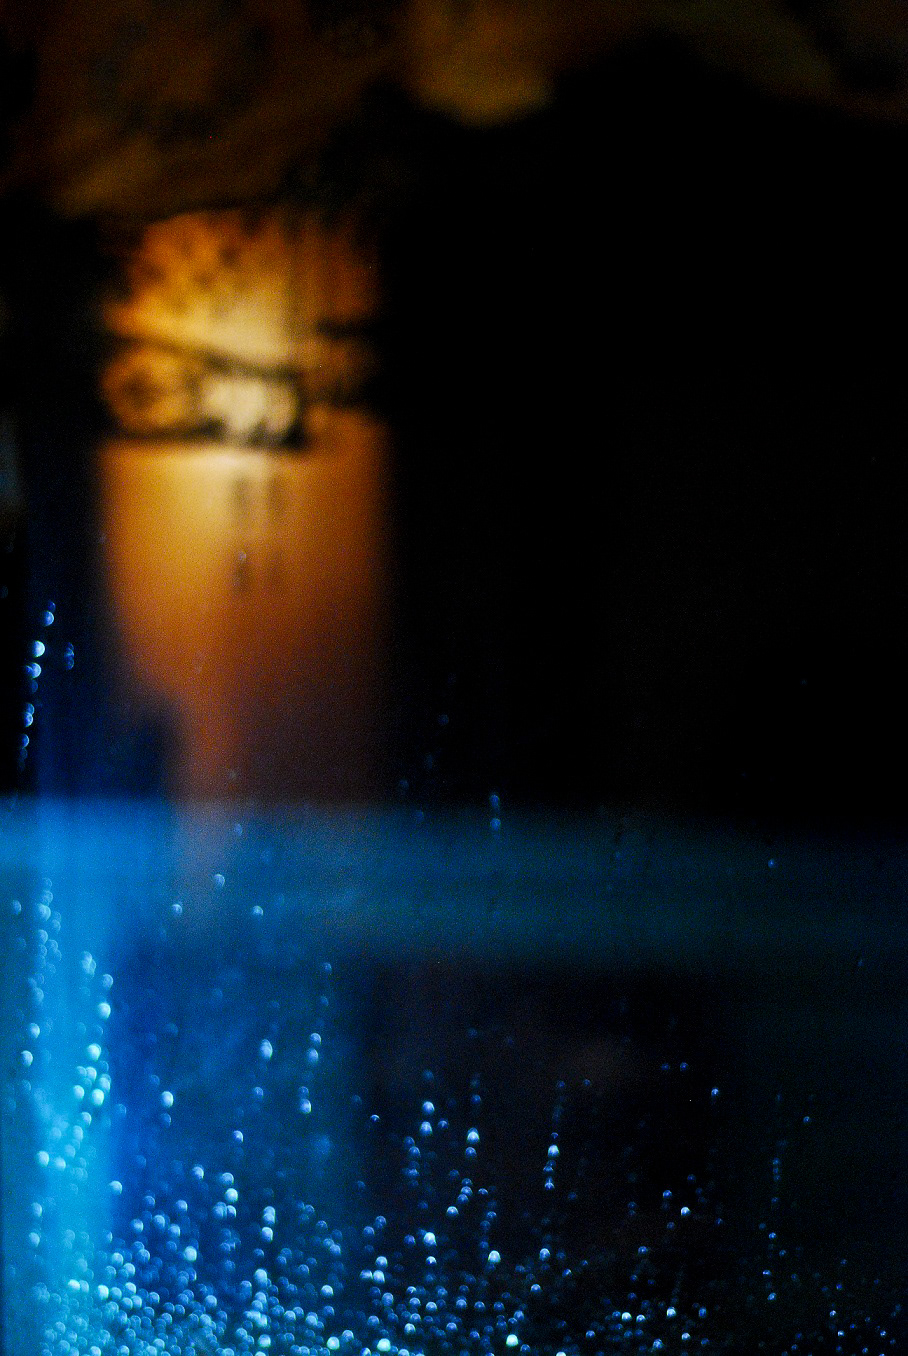 blue light Cat smoke Umbrella roof SKY Spots glass table Window rain orange curtains